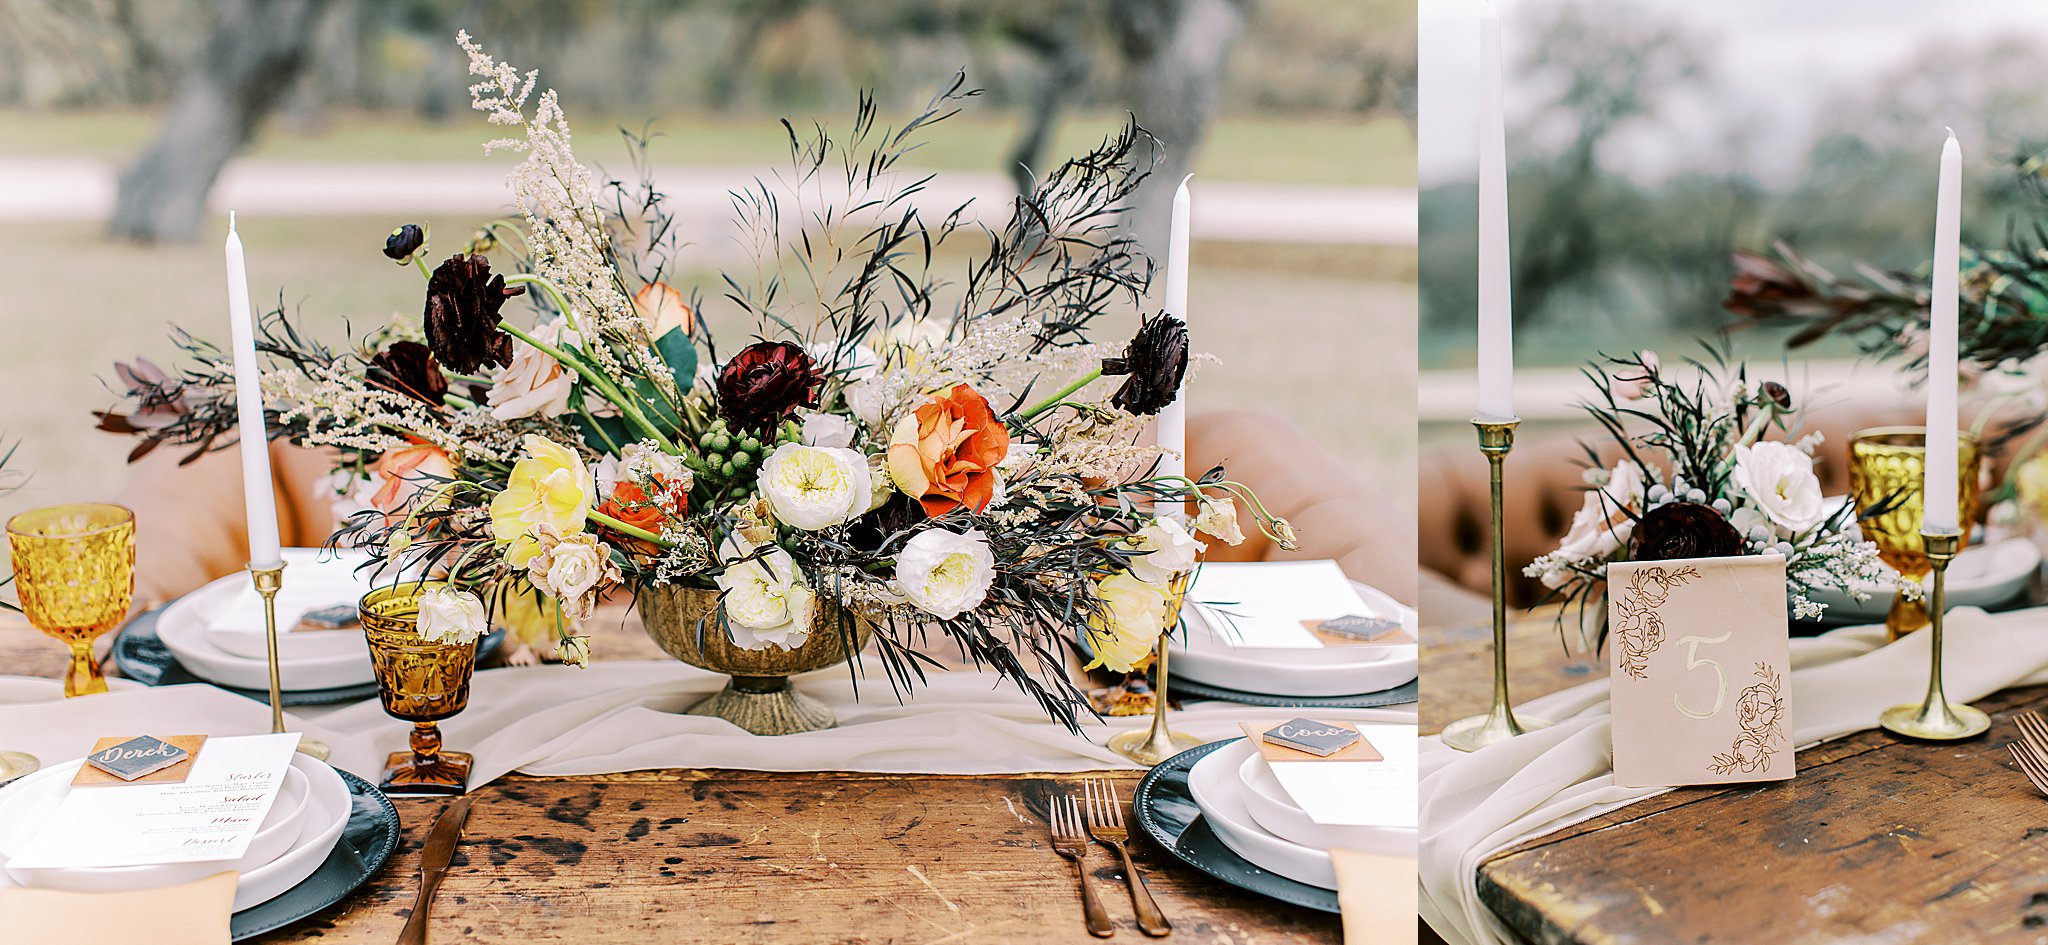 Fall tones wedding table inspiration in Texas